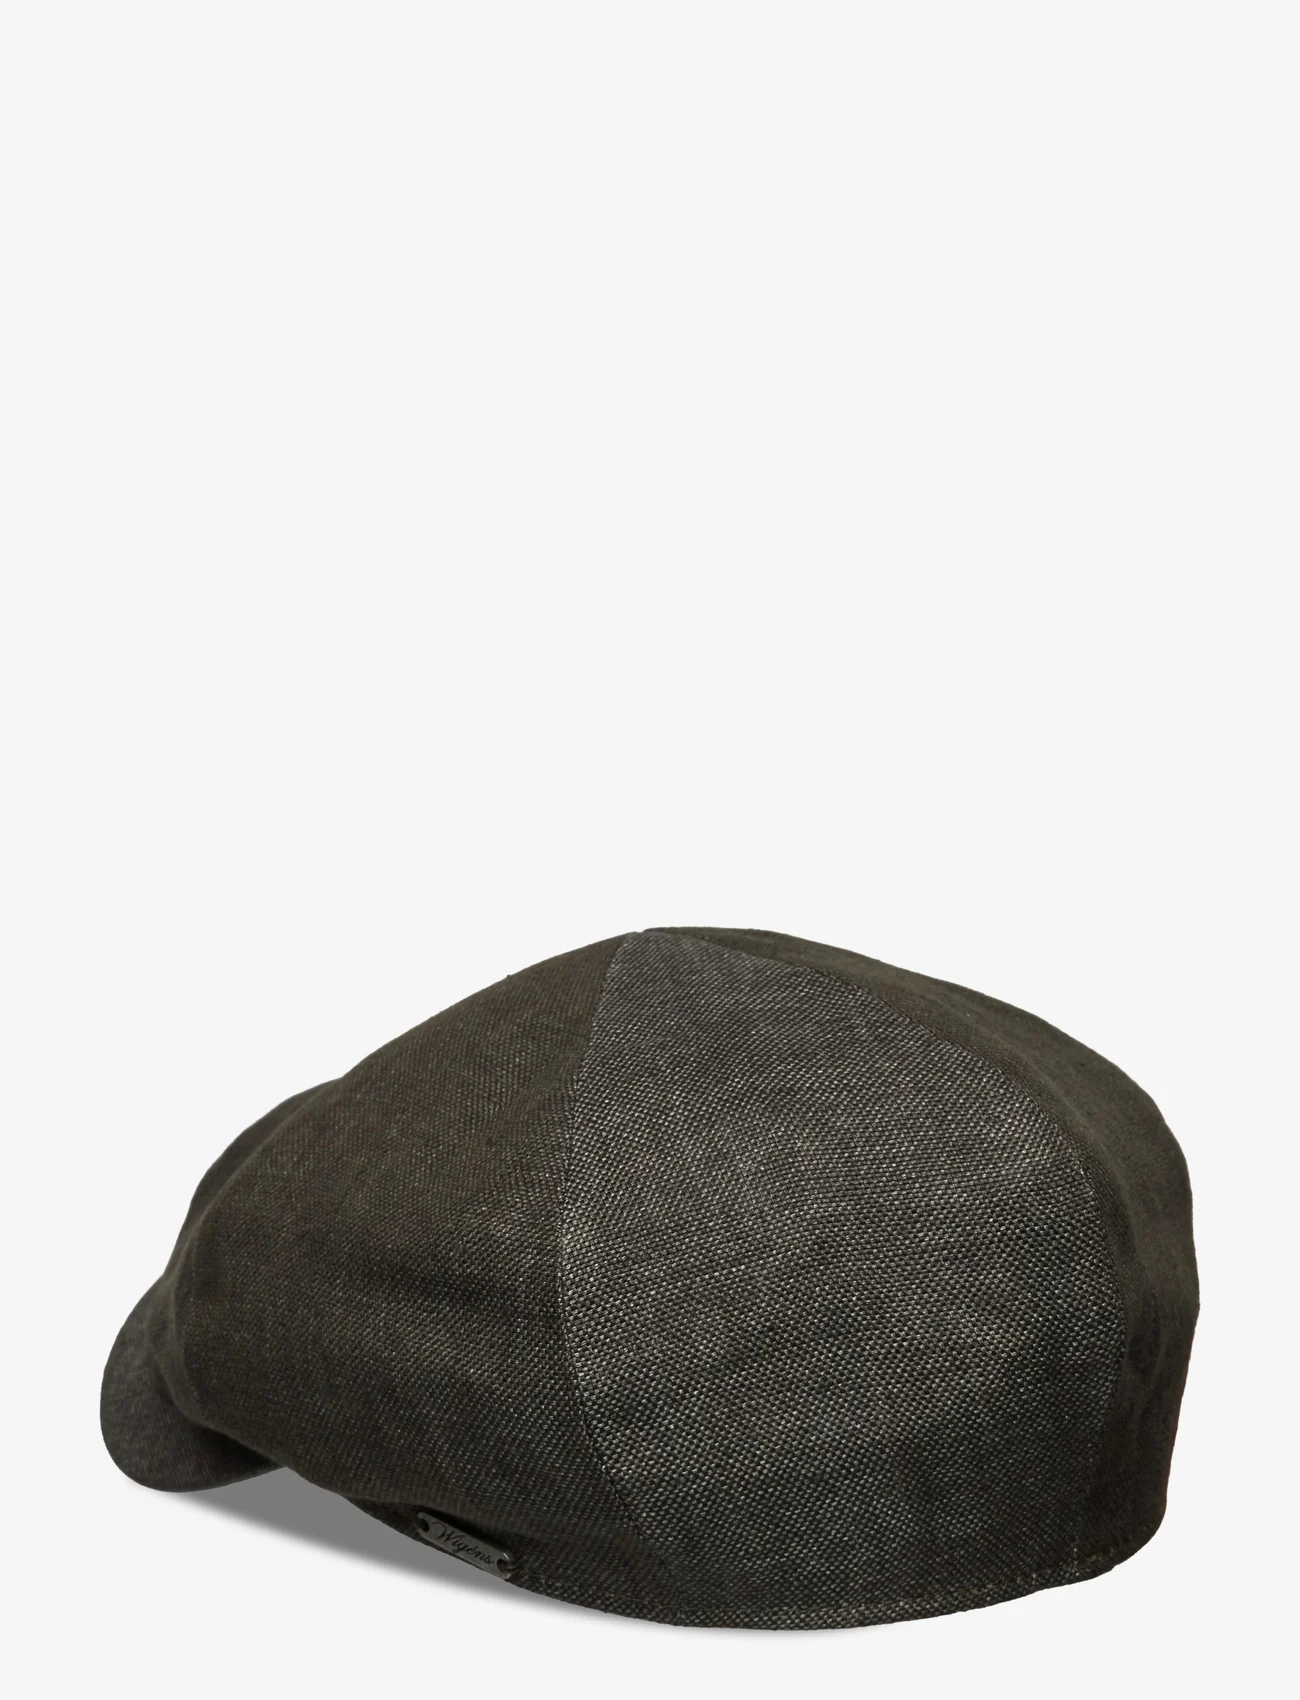 Wigéns - Newsboy Slim Cap - flat cap -hatut - dark olive - 1